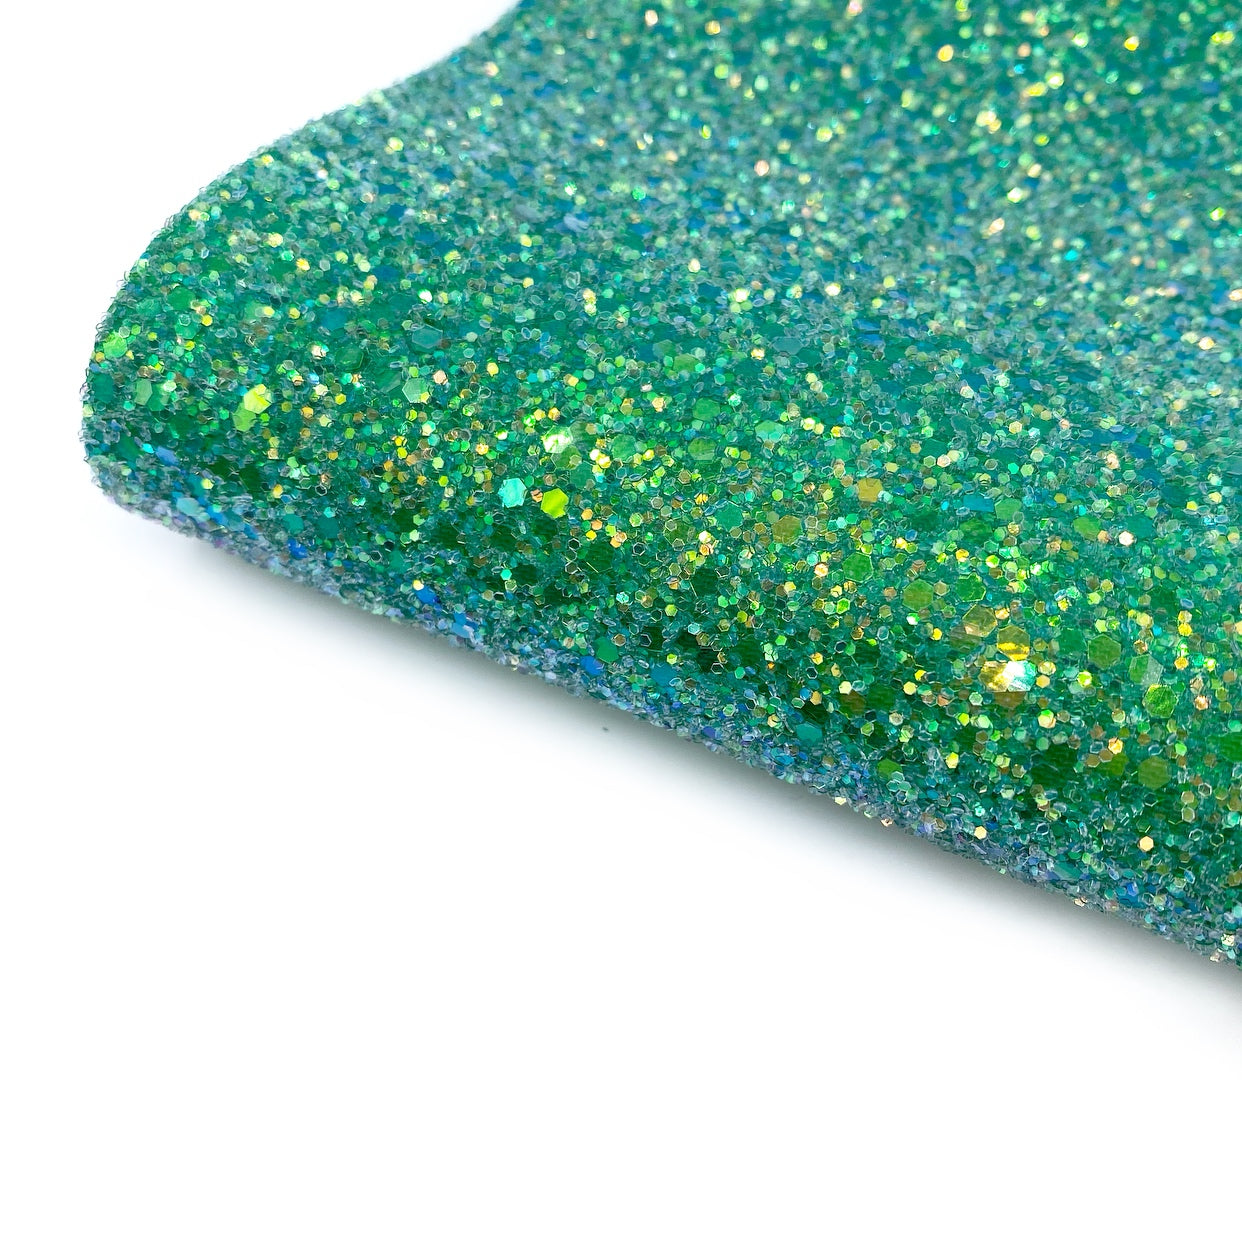 Seaweed Sparkles Fairytale Lux Premium Chunky Glitter Fabric